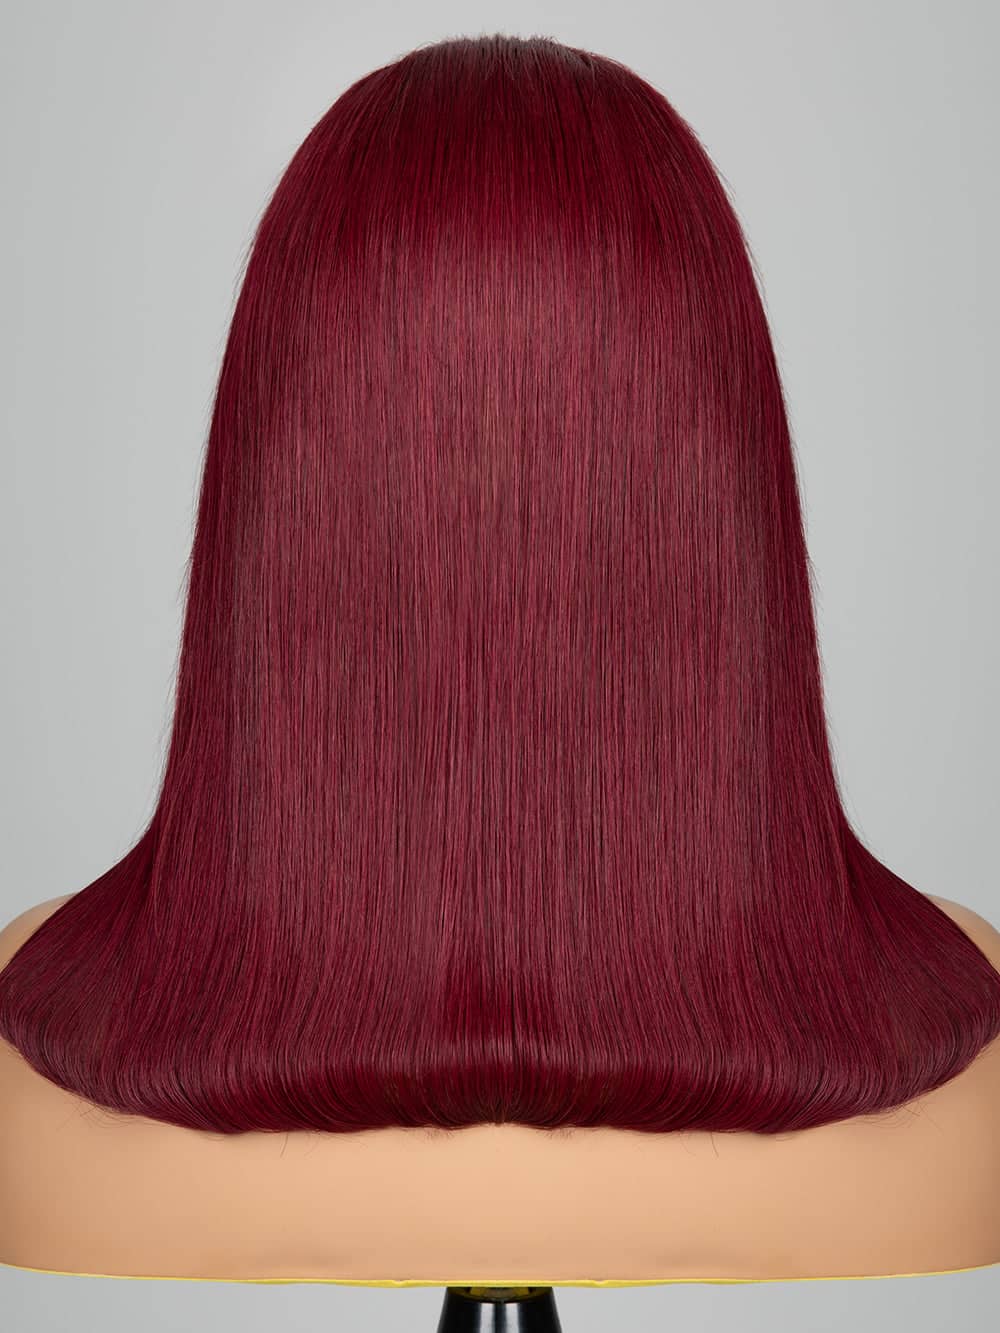 Keswigs 99j color 4x4 transparent lace closure wig 180% density human hair wigs